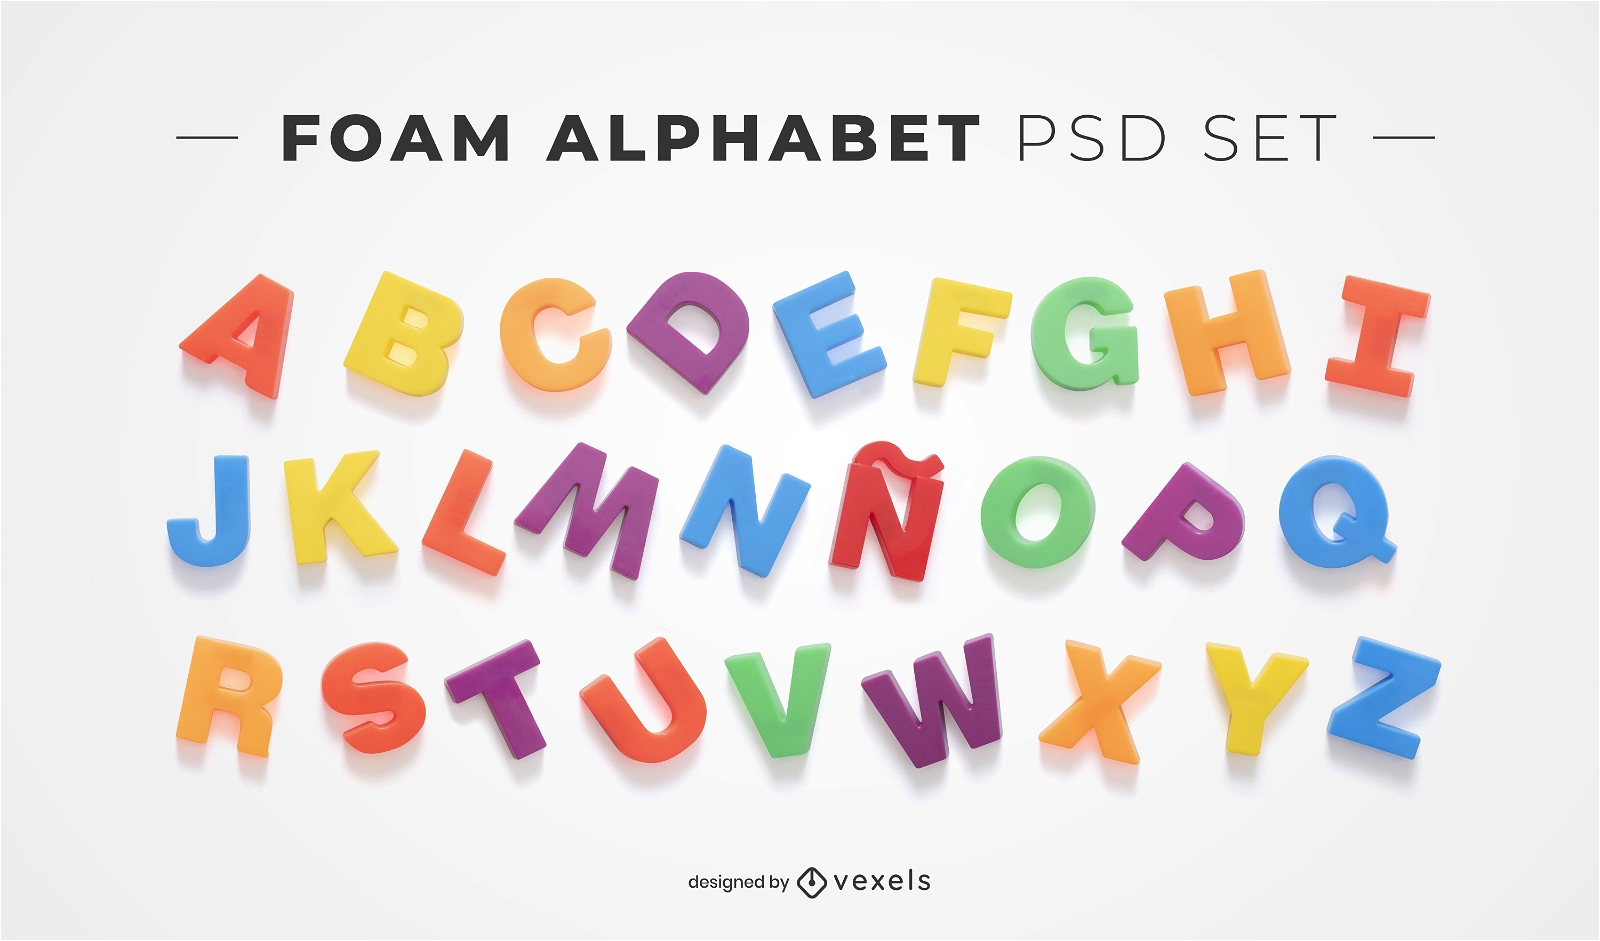 Foam alphabet psd elements for mockups